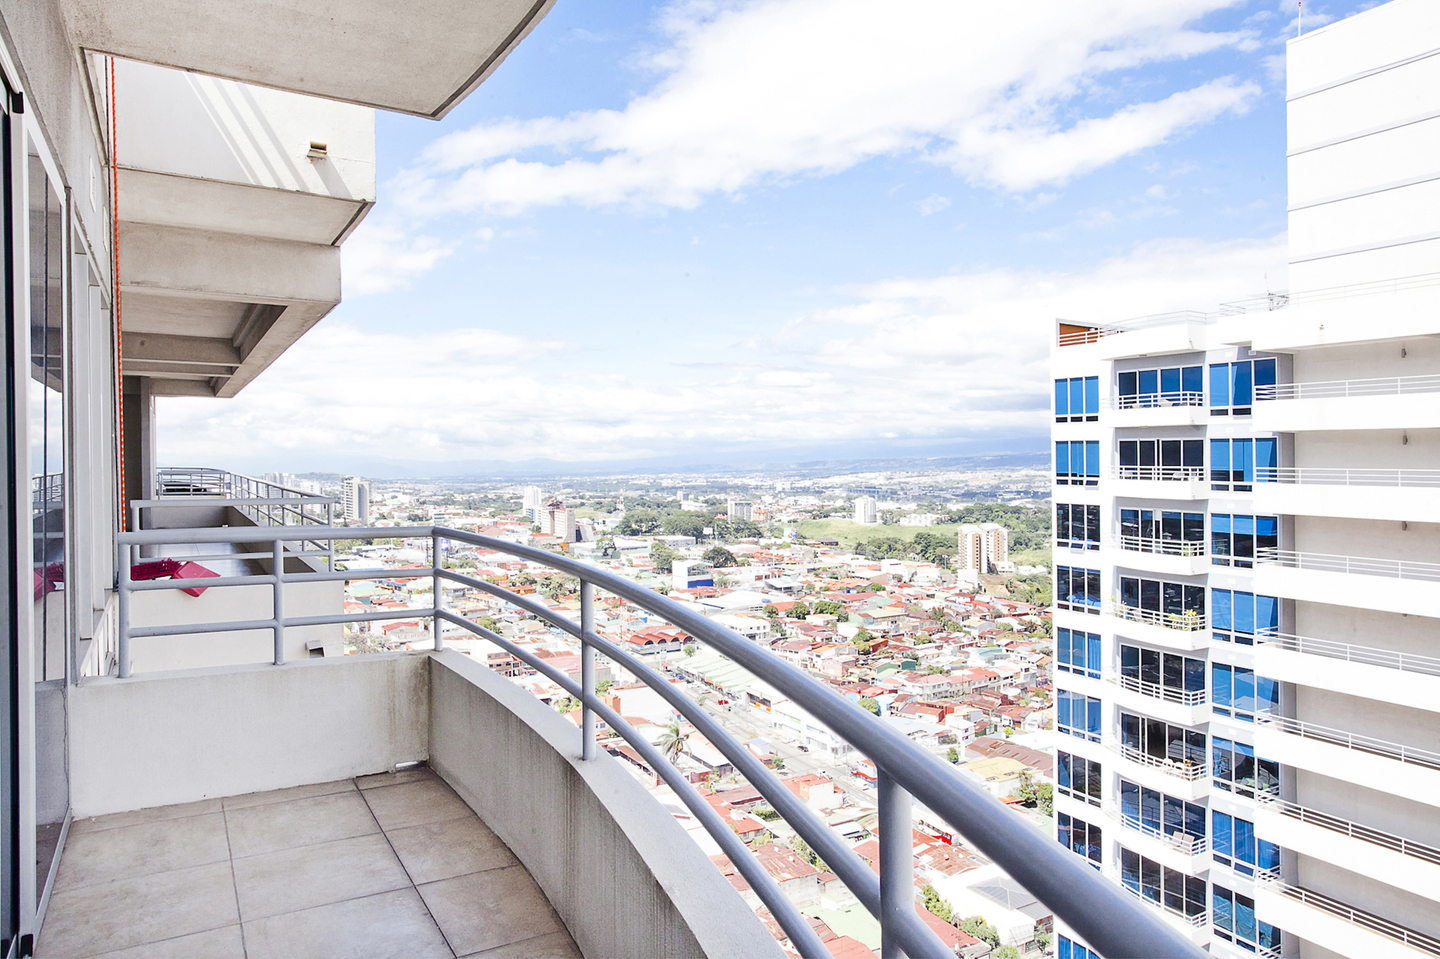 Sold: Torres Paseo Colon 3 Bedroom Furnished Top Floor Condo, #A2603 ...